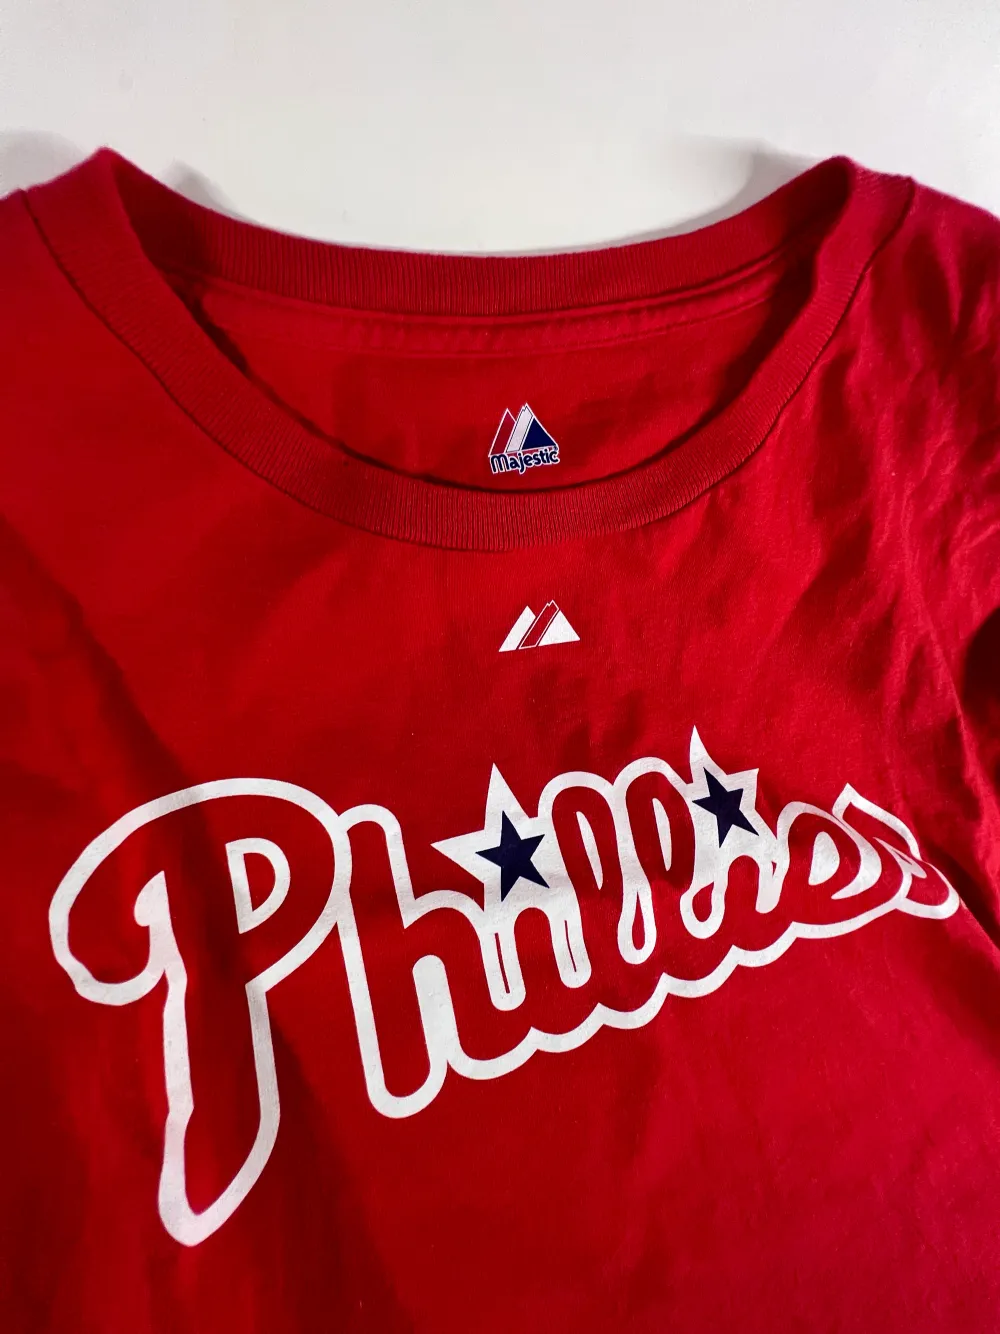 Philadelphia Phillies Roy Halladay t-shirt. Roy Halladay har spelat med the Phillies, mellan 2010-2013. På Majestic t-shirt.. T-shirts.